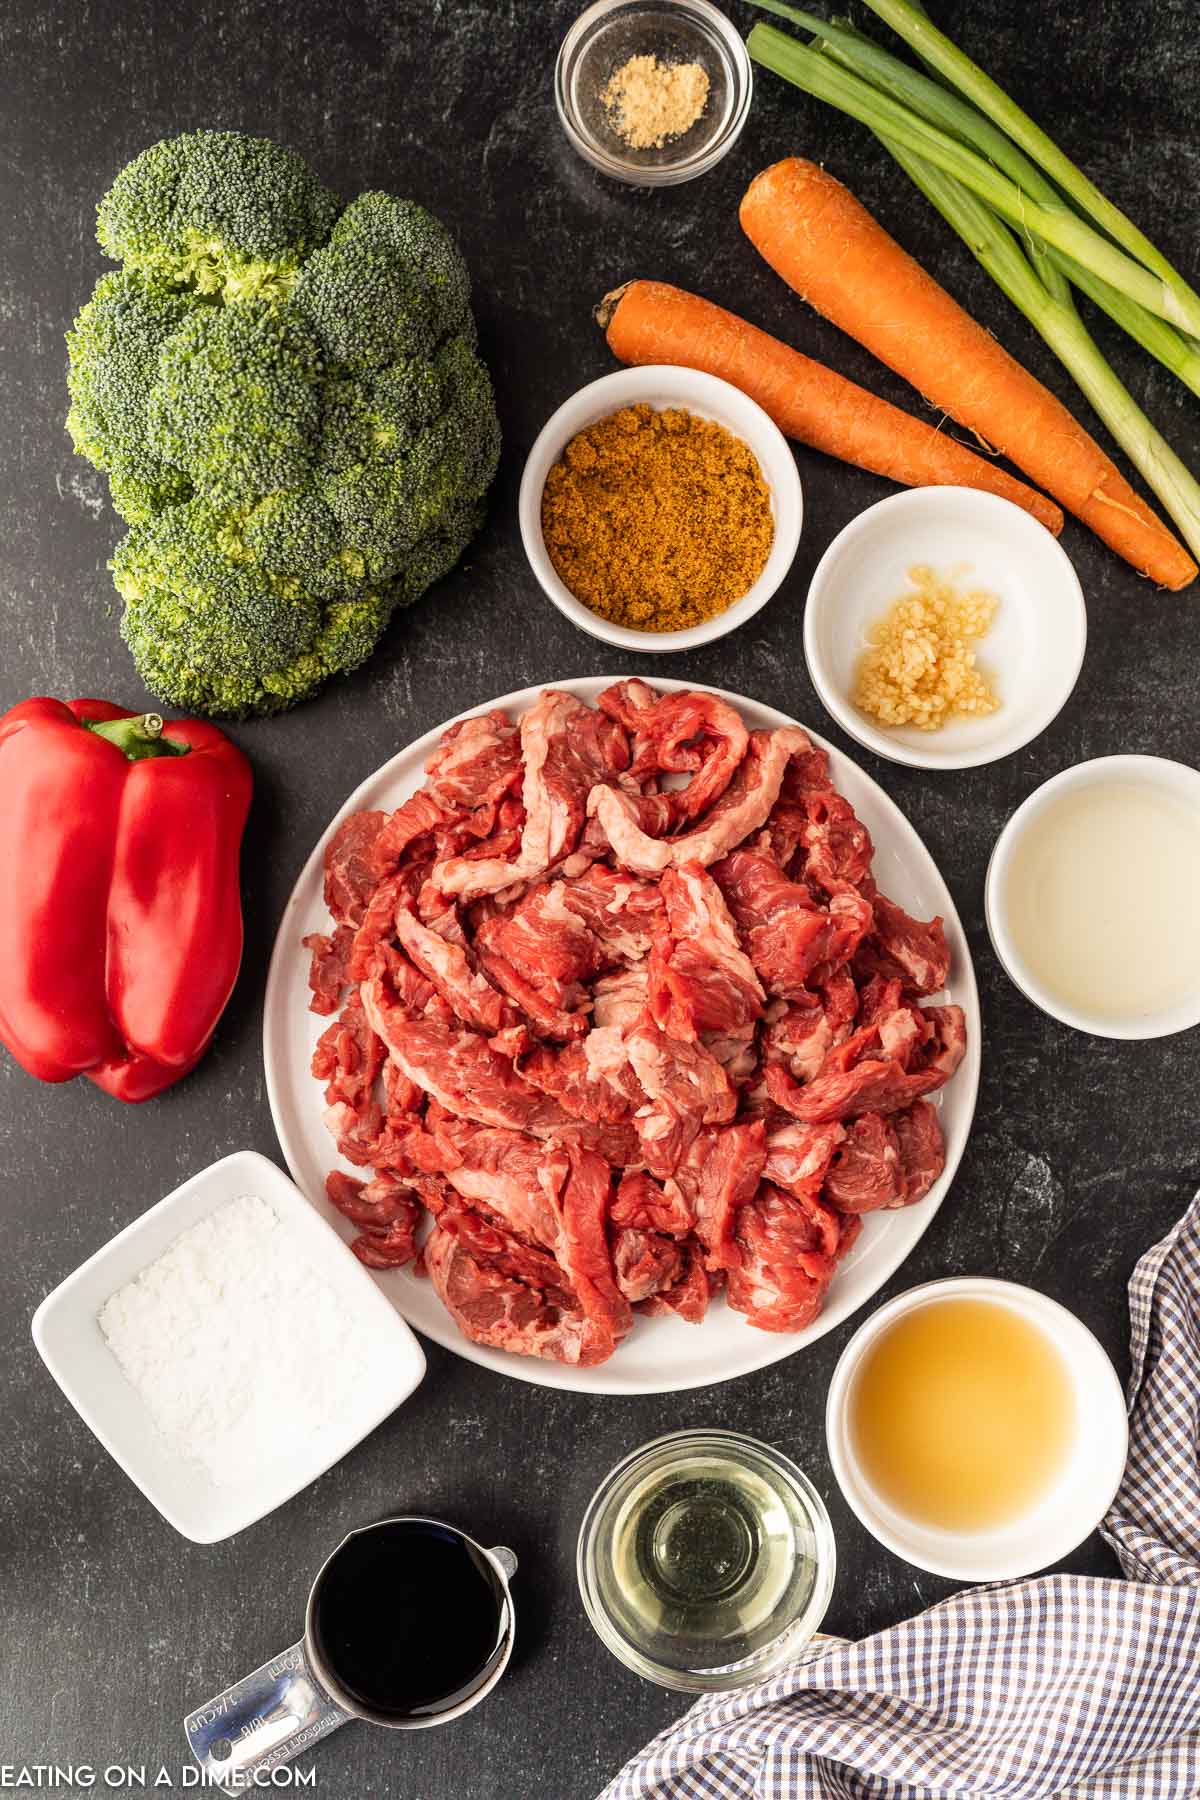 Ingredients needed for beef stir fry